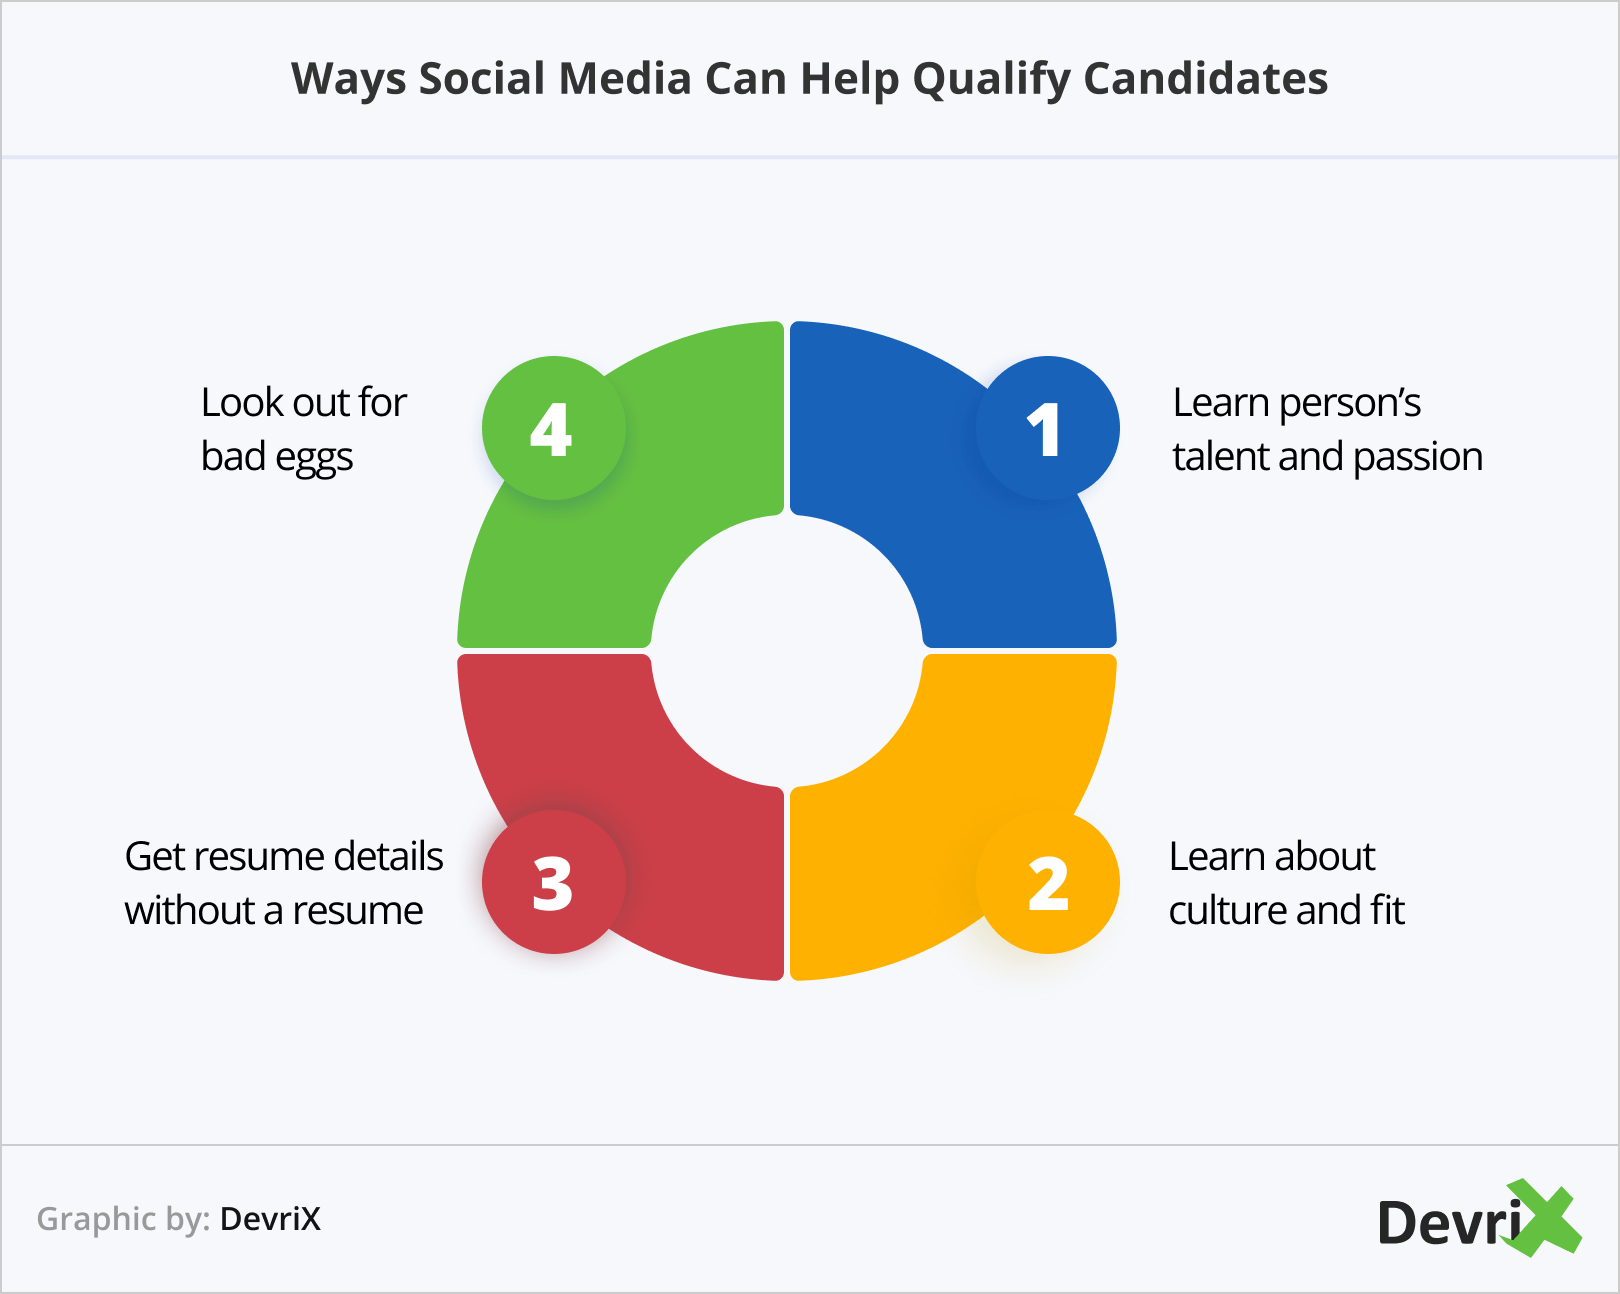 Ways Social Media Can Help Qualify Candidates